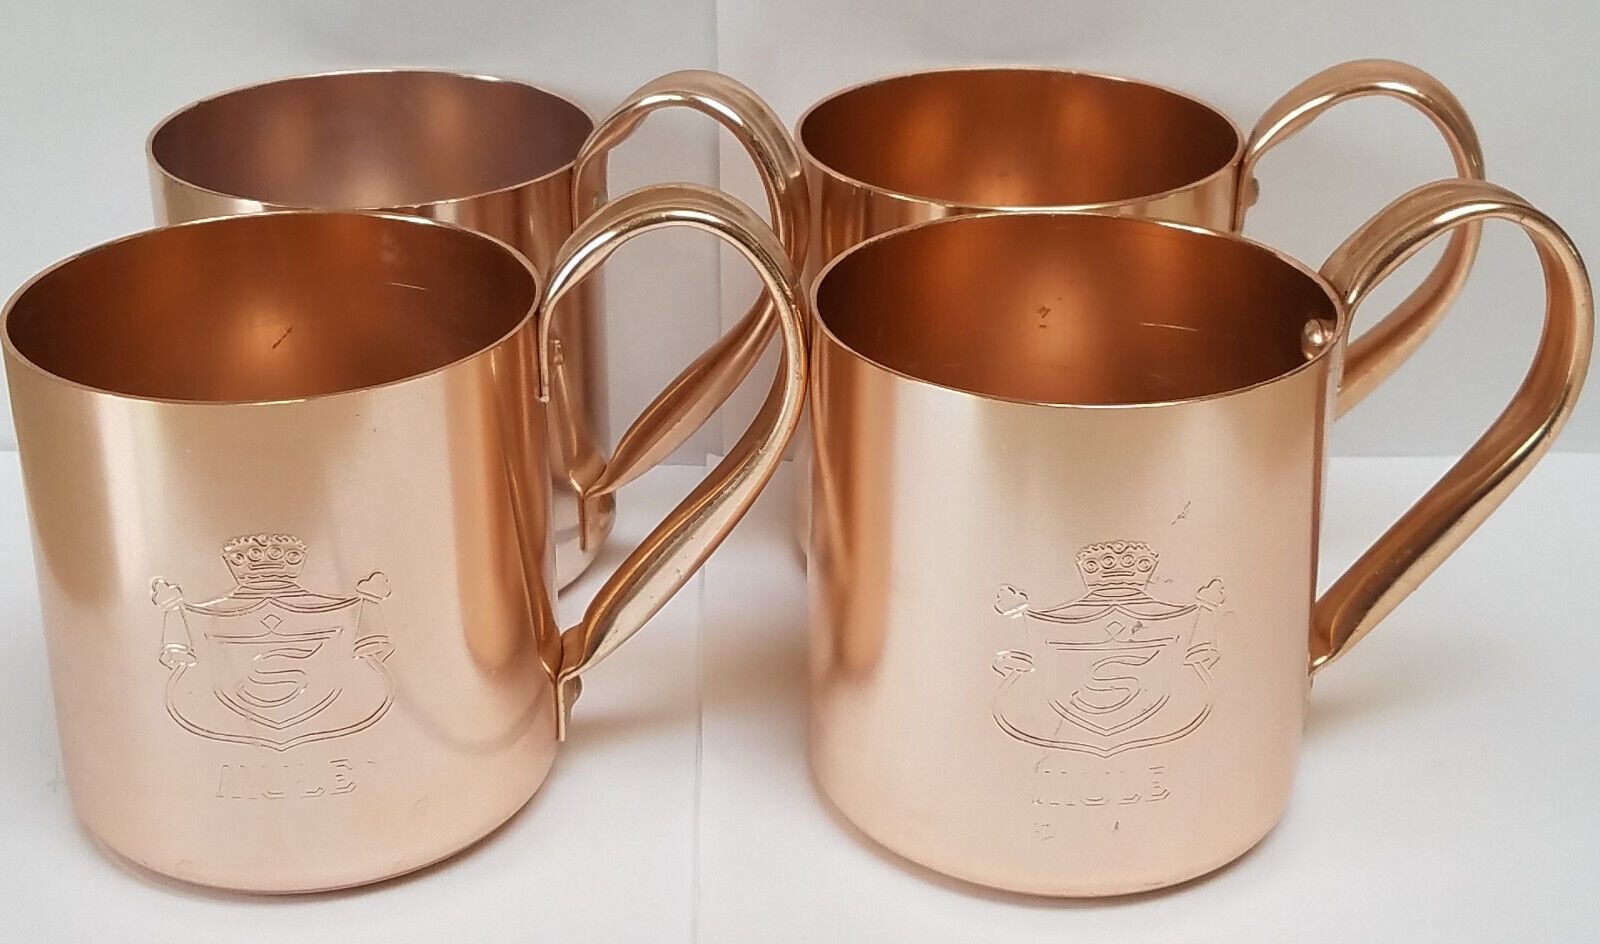 Vintage 1982 Smirnoff Vodka Moscow Mule Cup 10 oz Aluminum Copper Mugs Set of 4